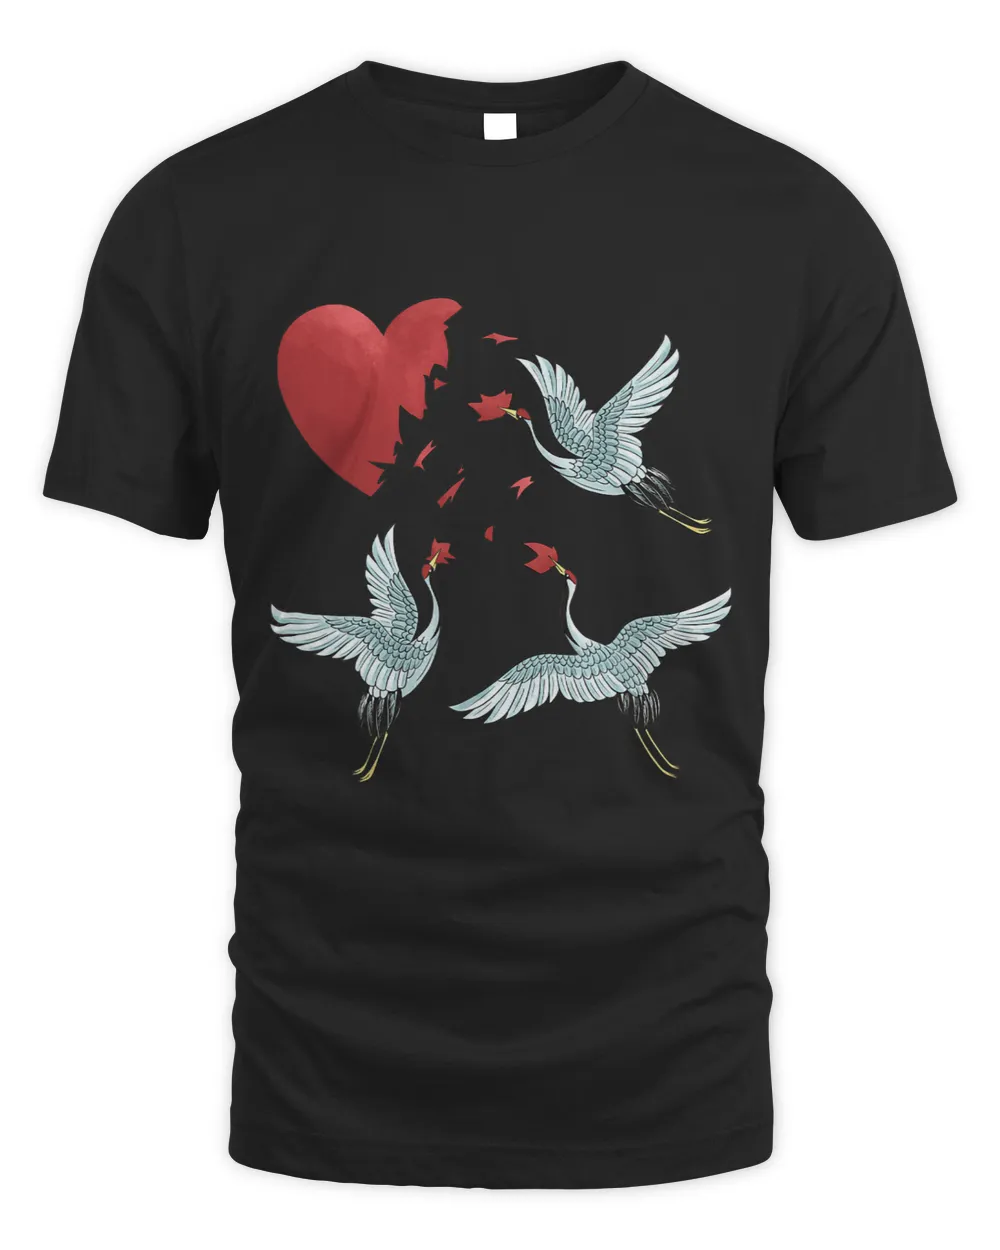 Broken Heart and Crane Birds For Valentines Day